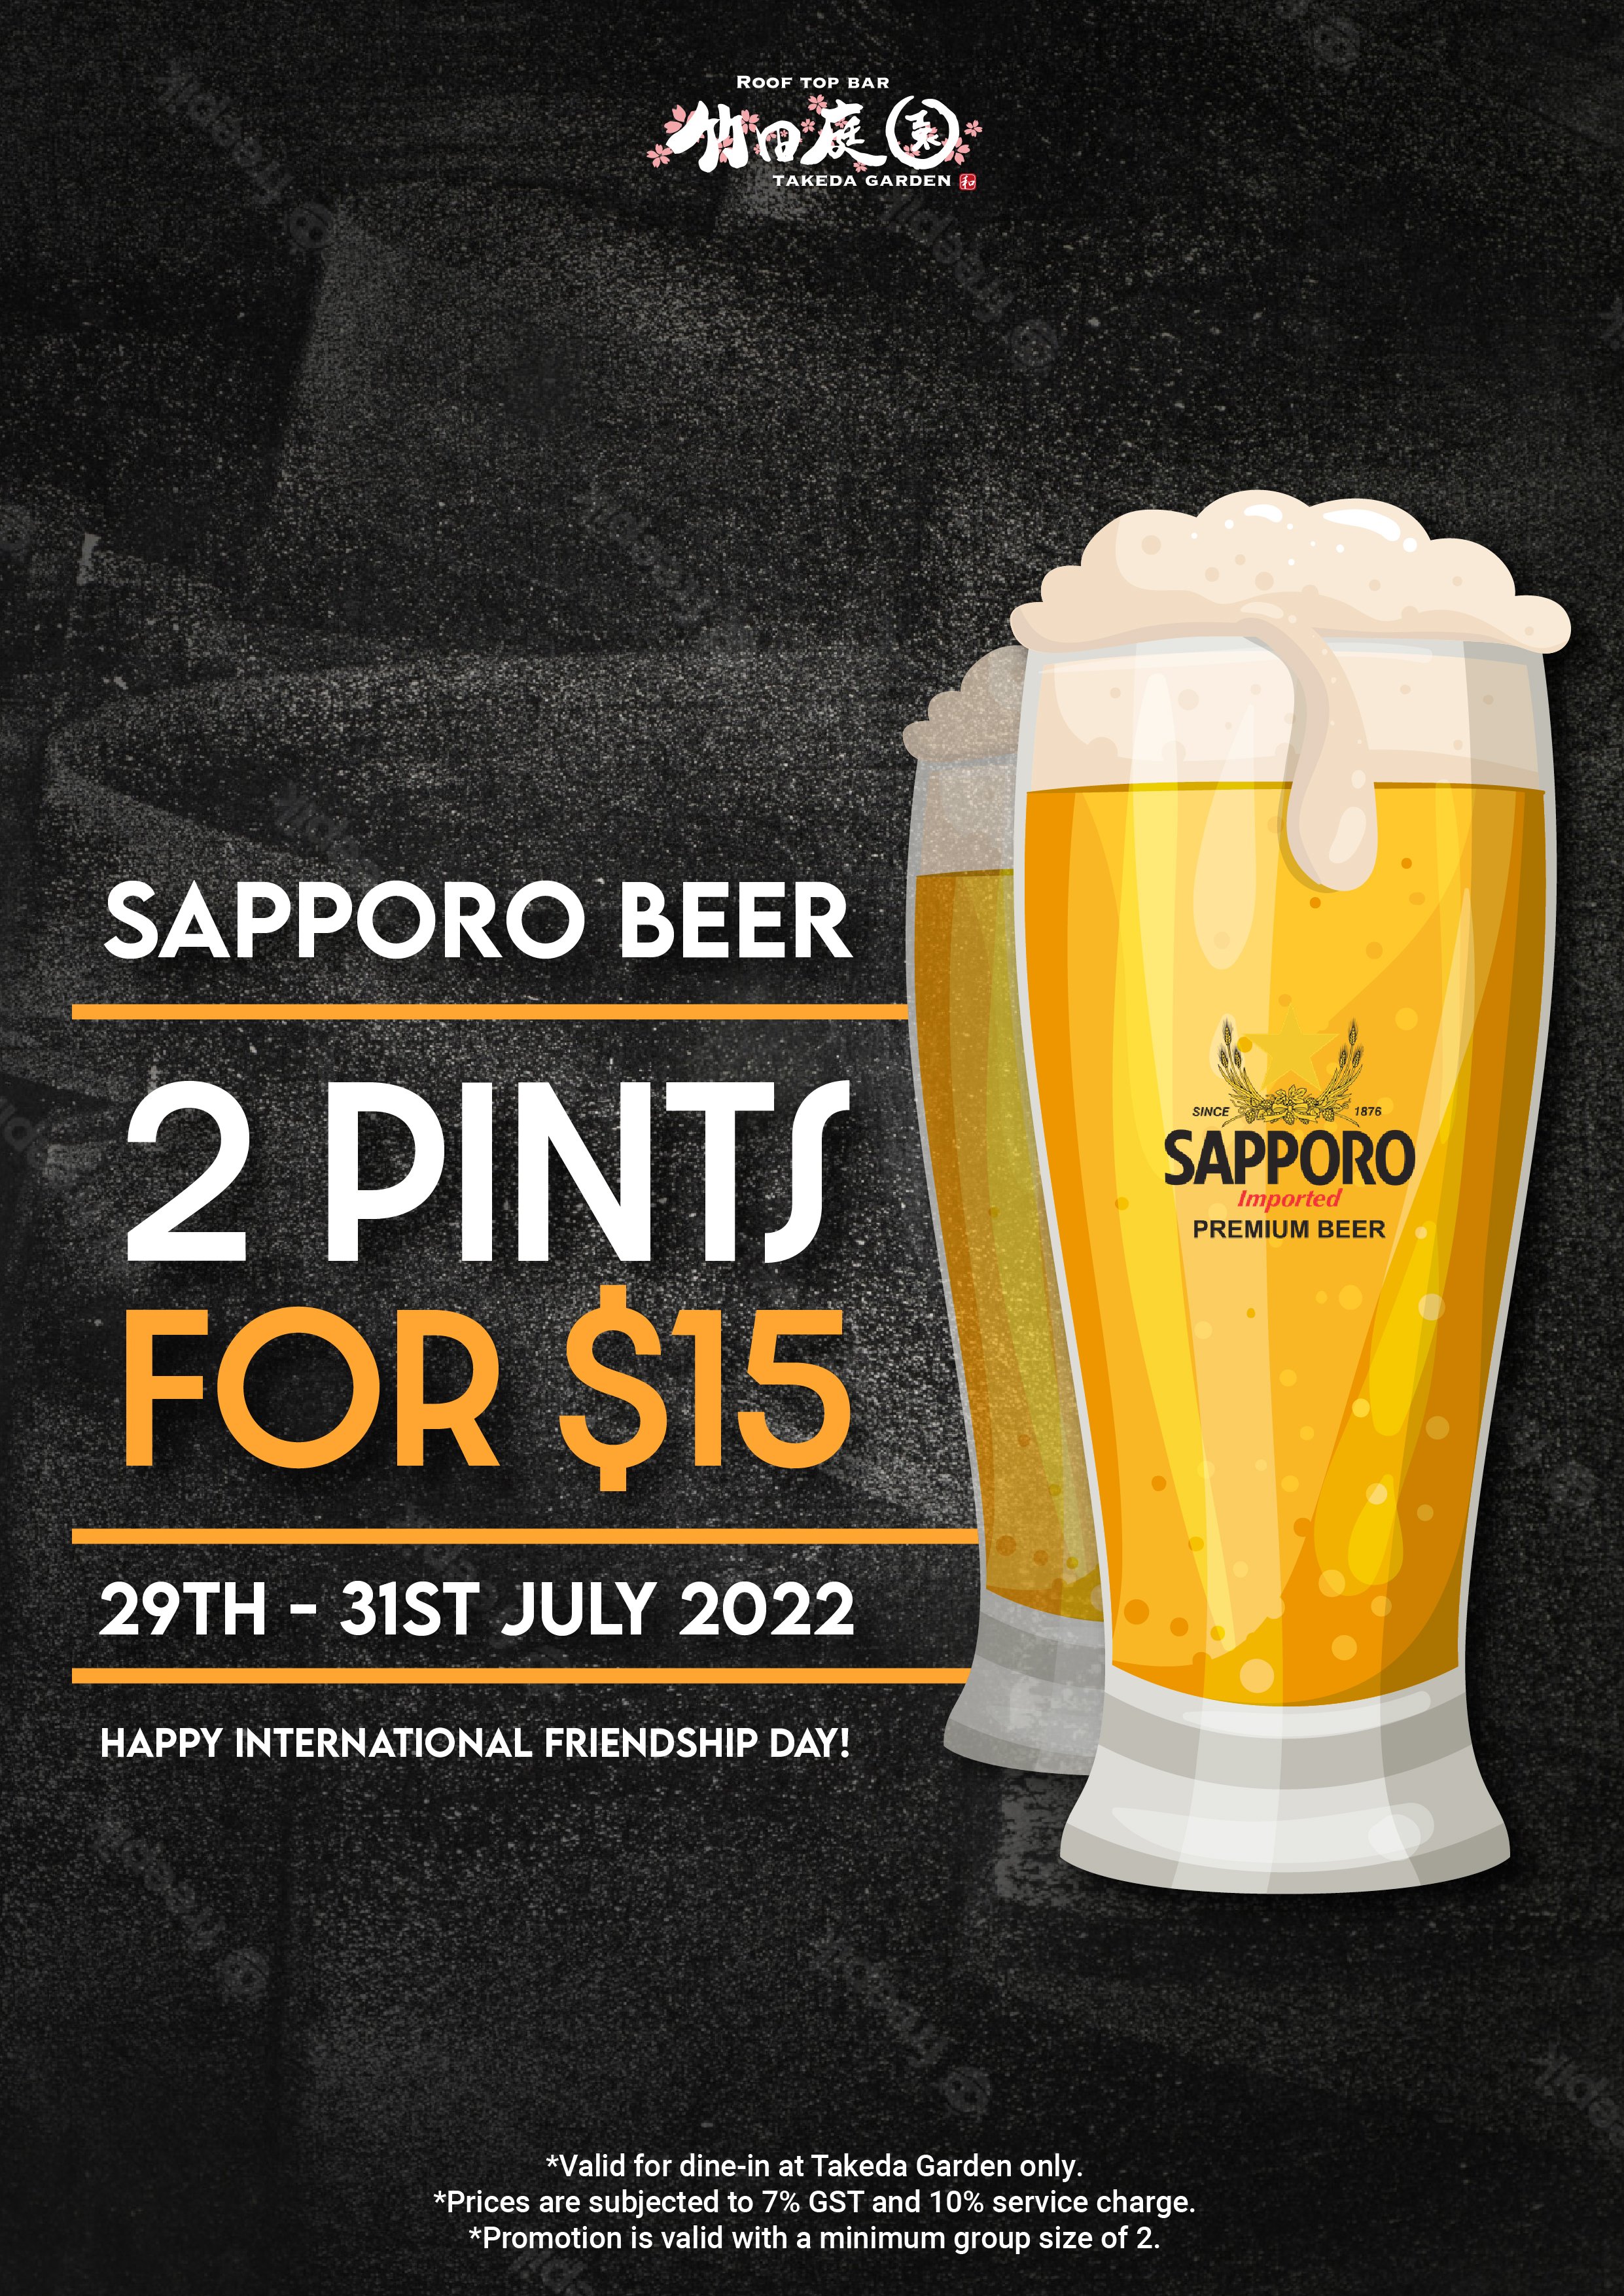 Sapporo Beer 2 Pints $15 Promo.jpg